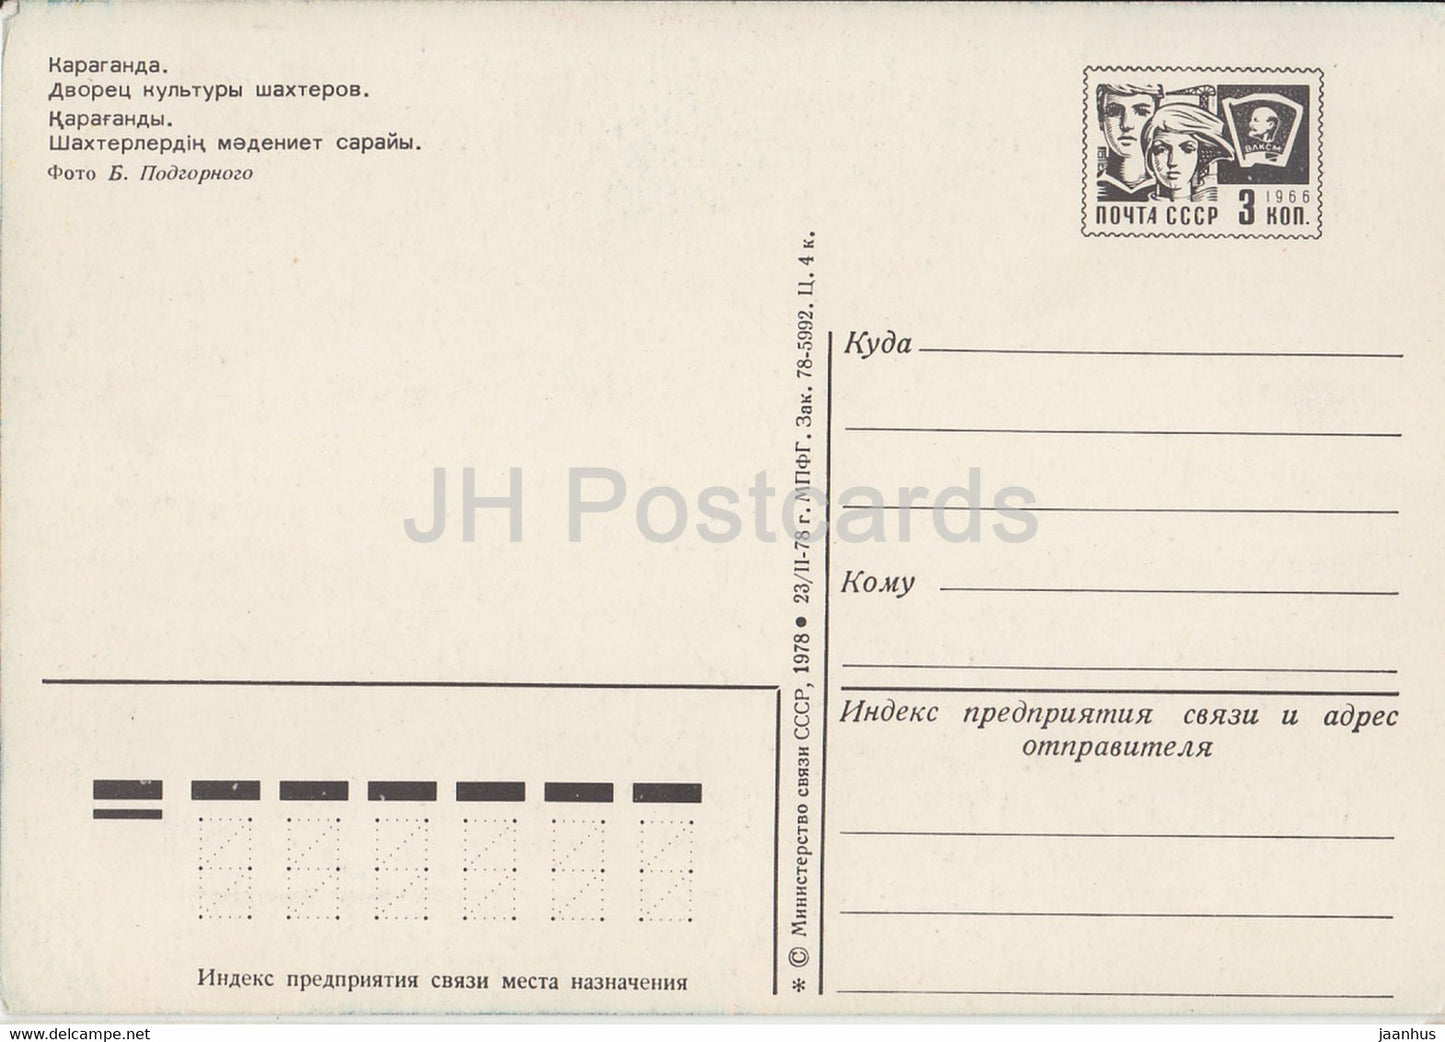 Karaganda - Karagandy - Miners' Palace of Culture - postal stationery - 1978 - Kazakhstan USSR - unused